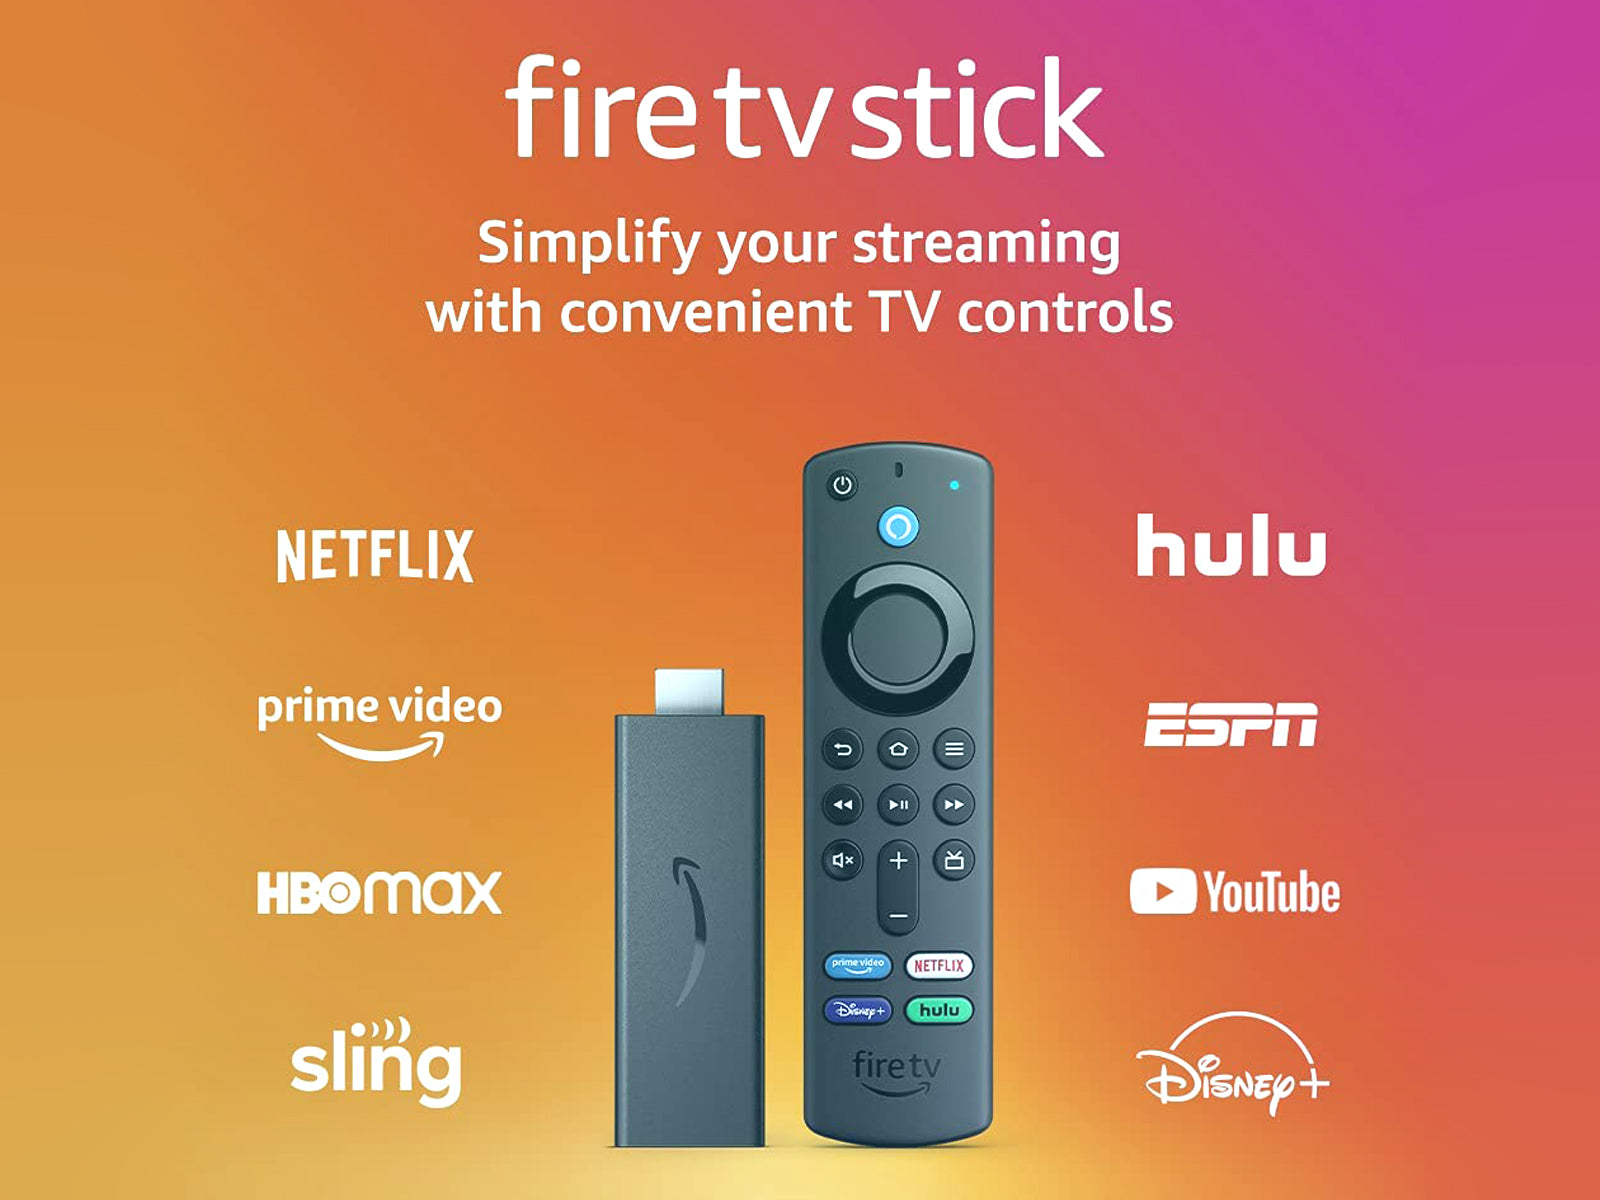 Image shows information regarding the Amazon Fire TV Stick HD 2020